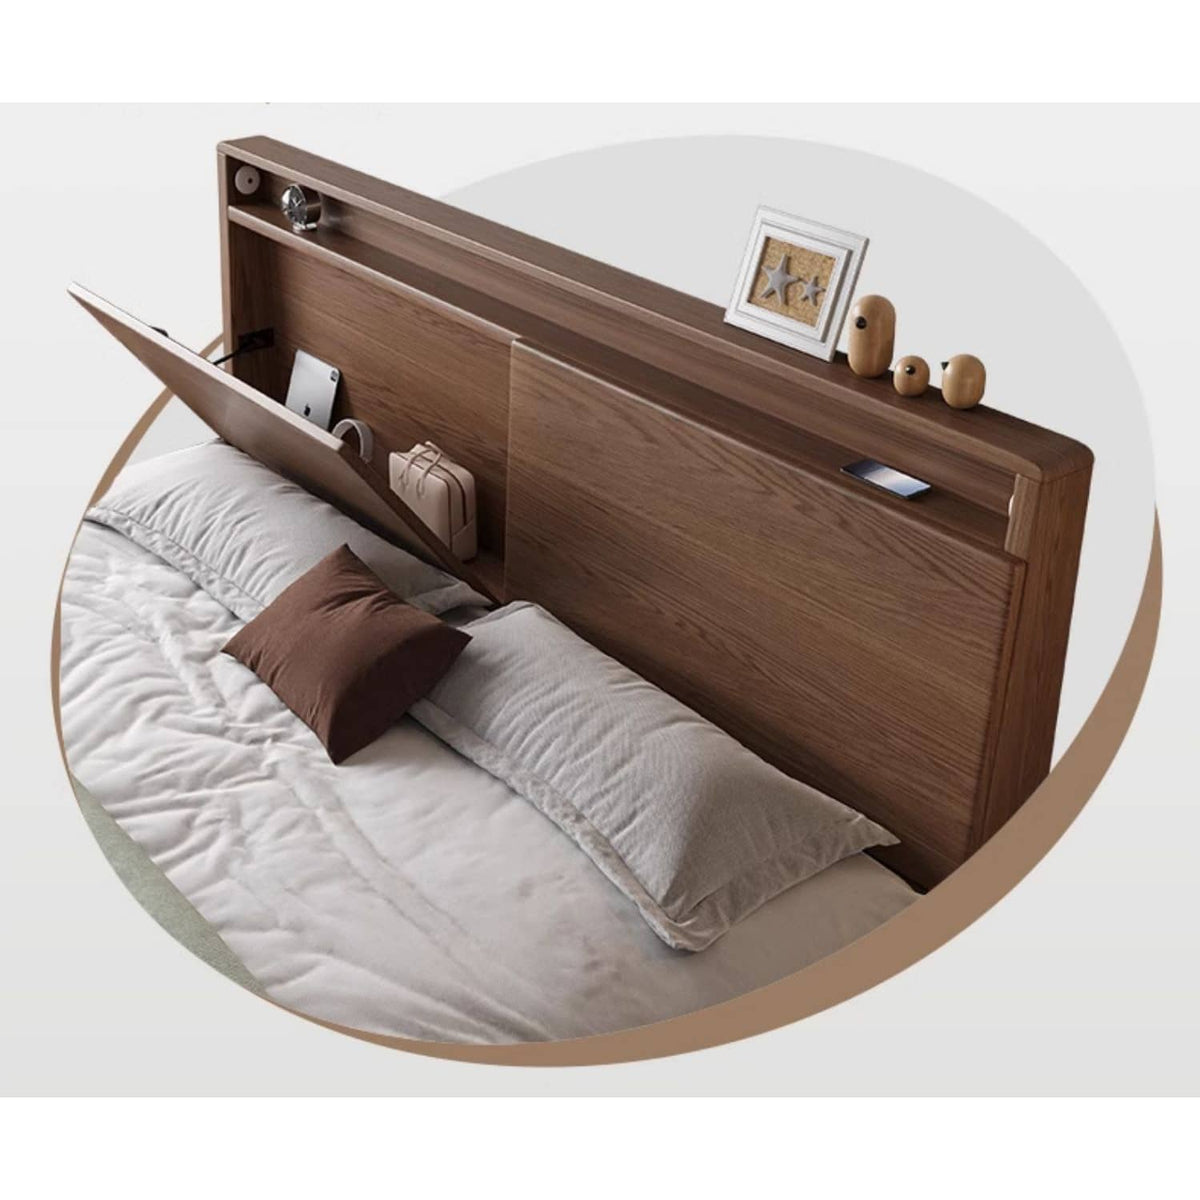 Stunning Bed Frame in Rich Brown Rubber Wood and Pine - Elegant Bedroom Upgrade hmak-242